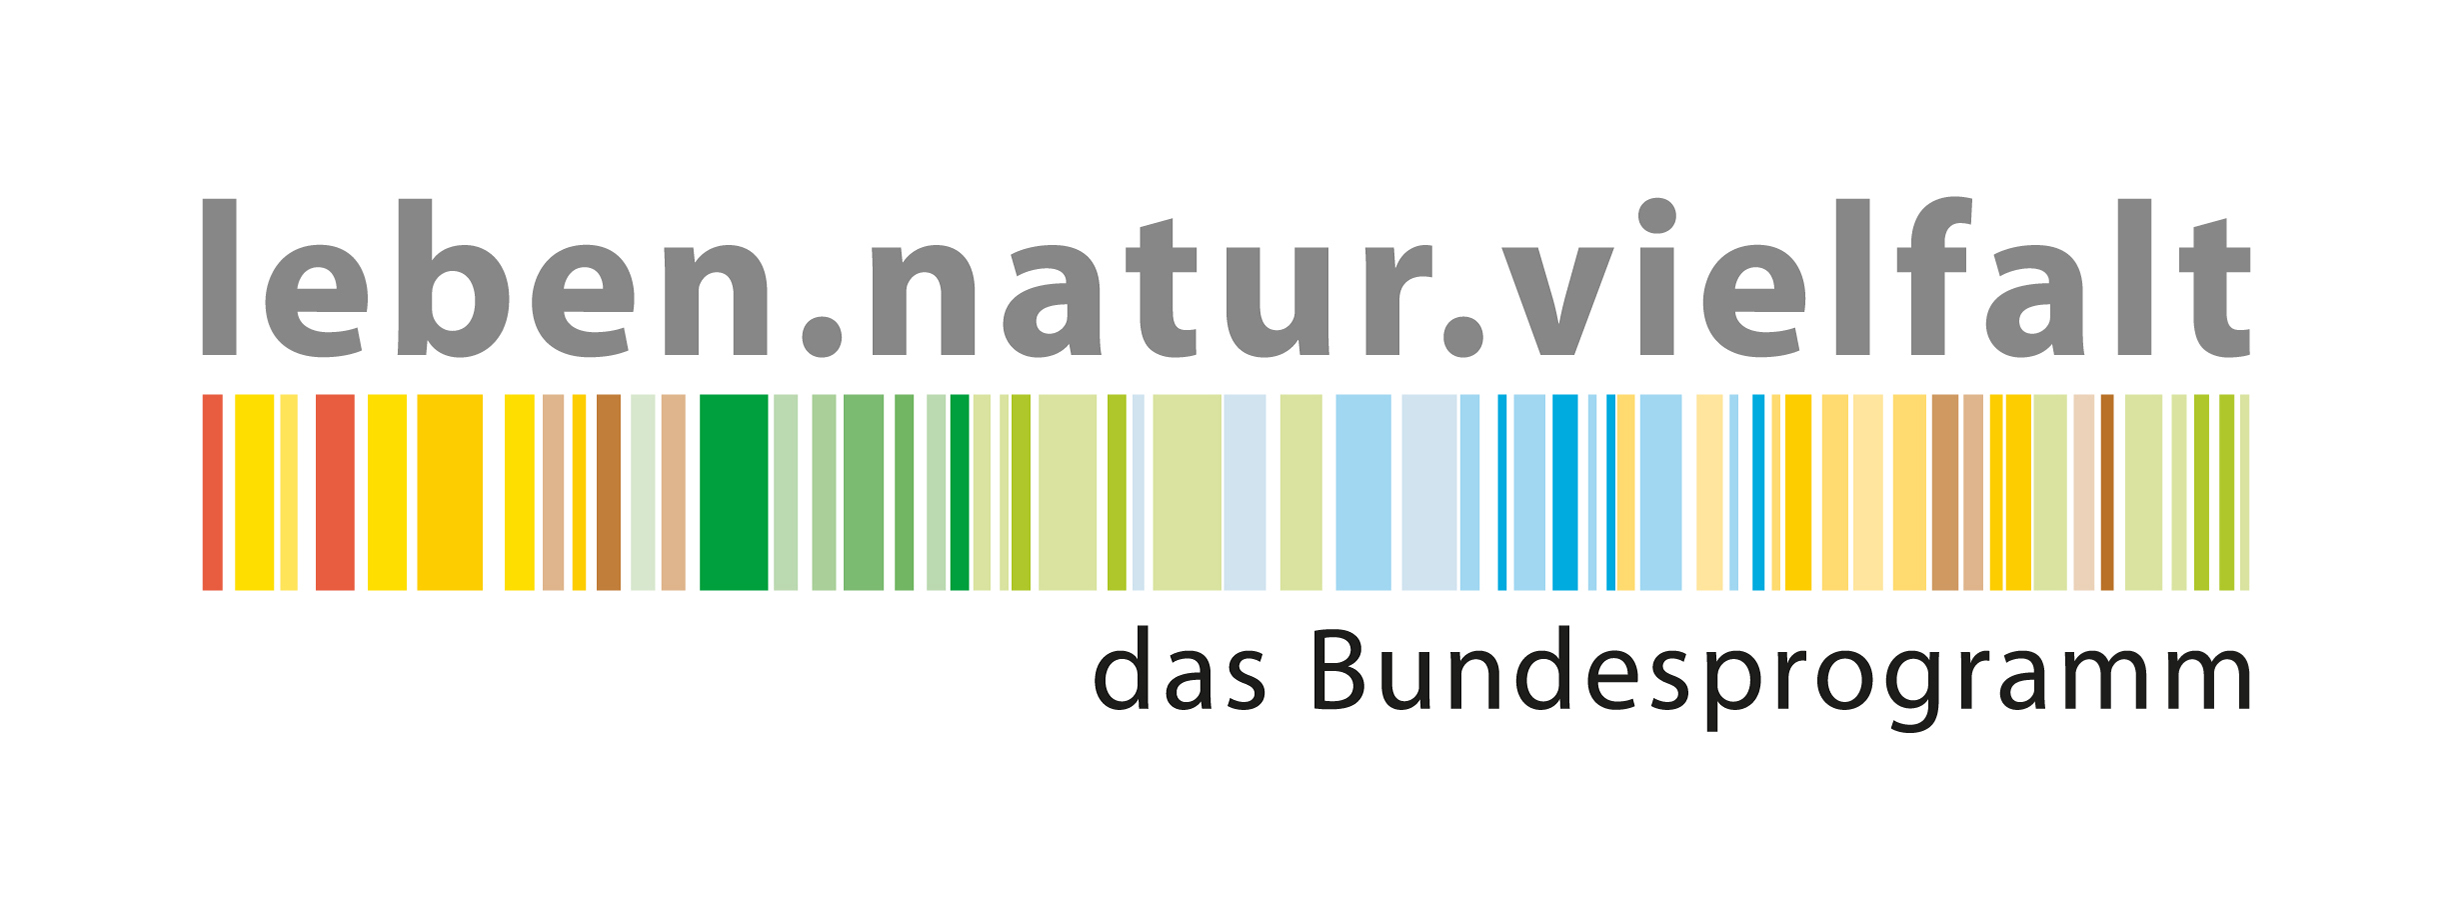 Logo_NBS_UZ_das_Bundesprogr_rgb_L.jpg